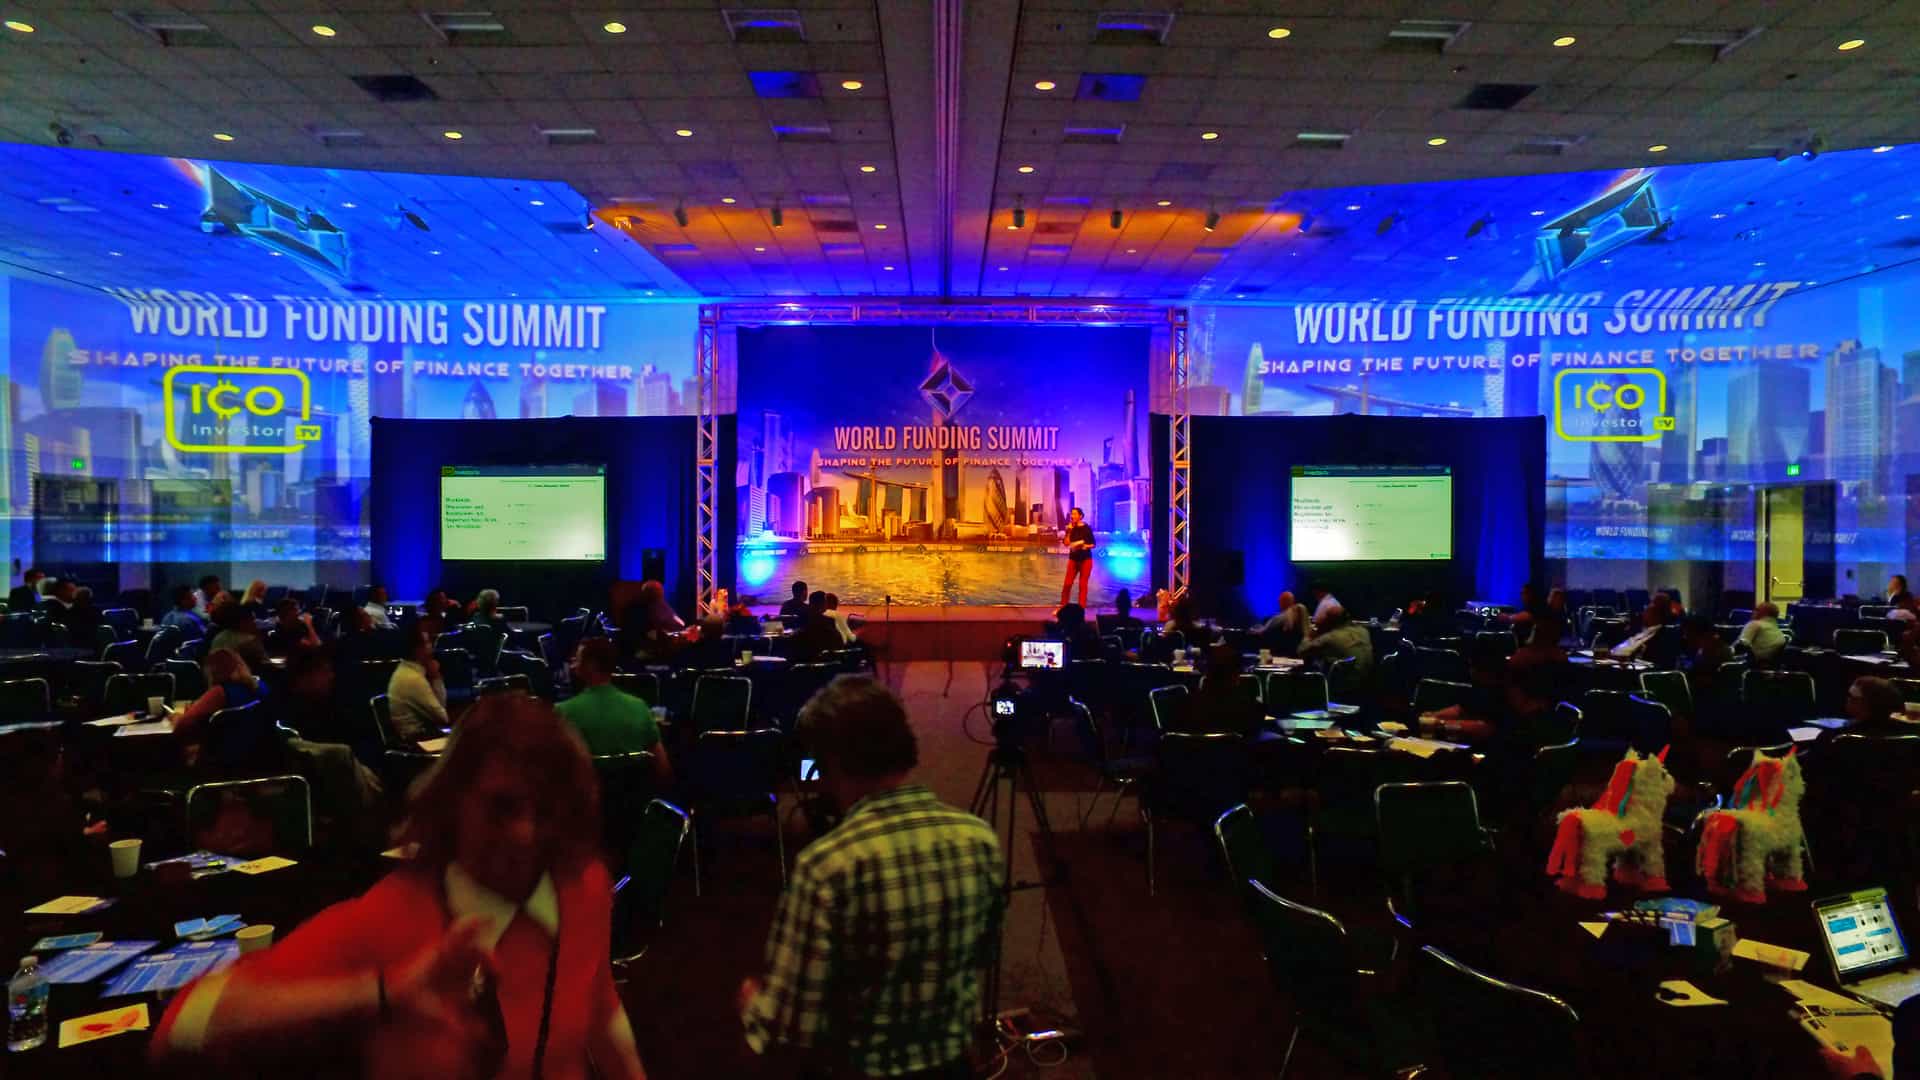 The World Funding Summit ~ LA Convention Center